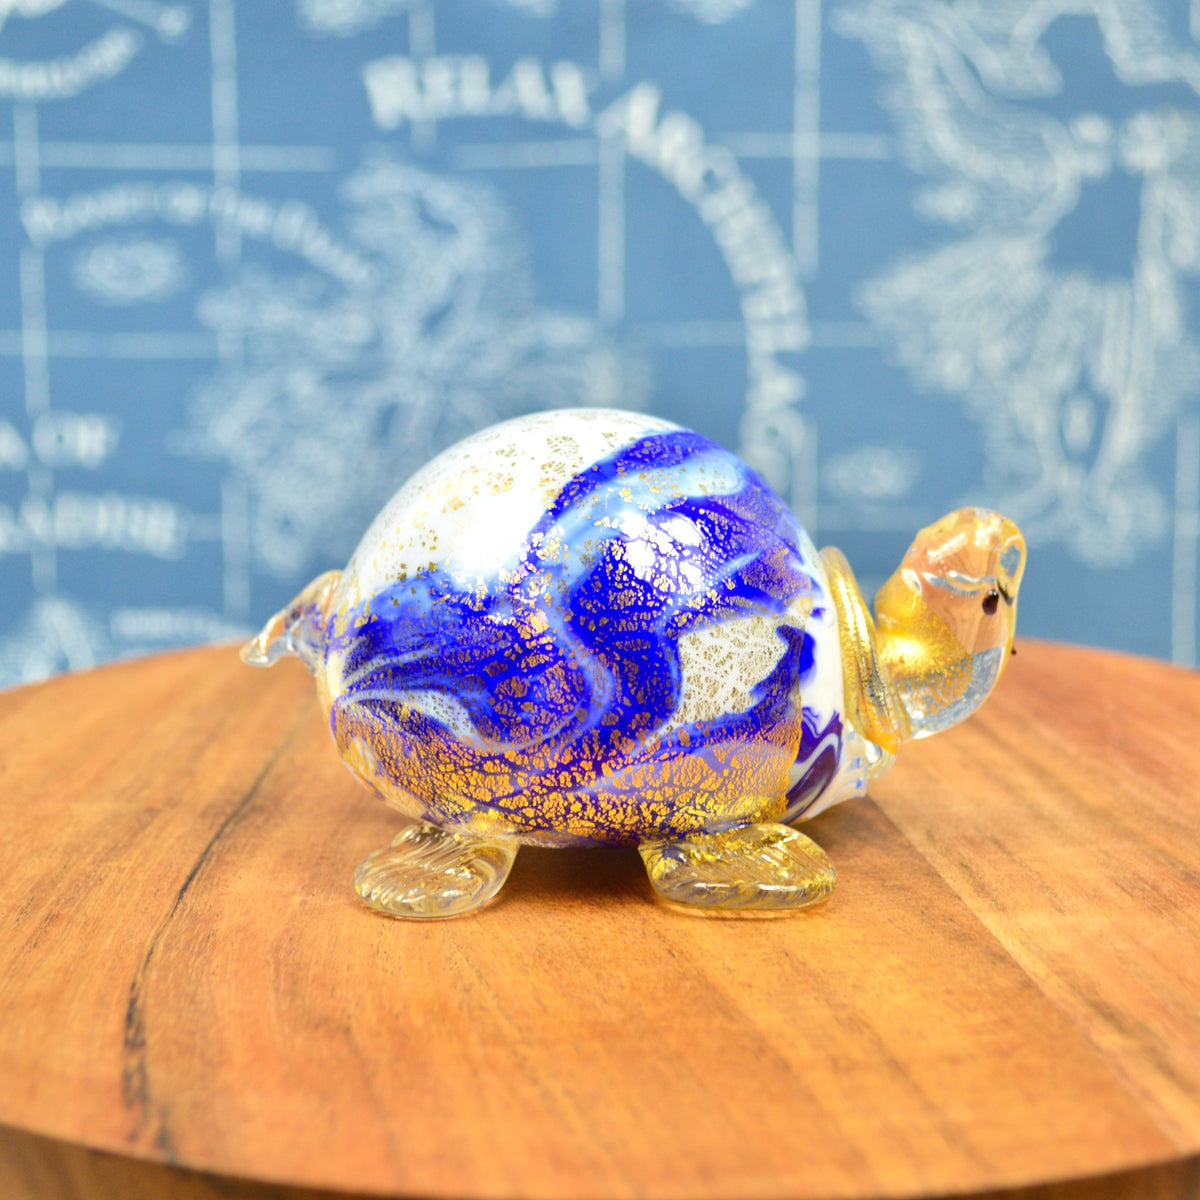 Murano Glass Turtle, Decorative Figurine, Made in Italy - My Italian Decor